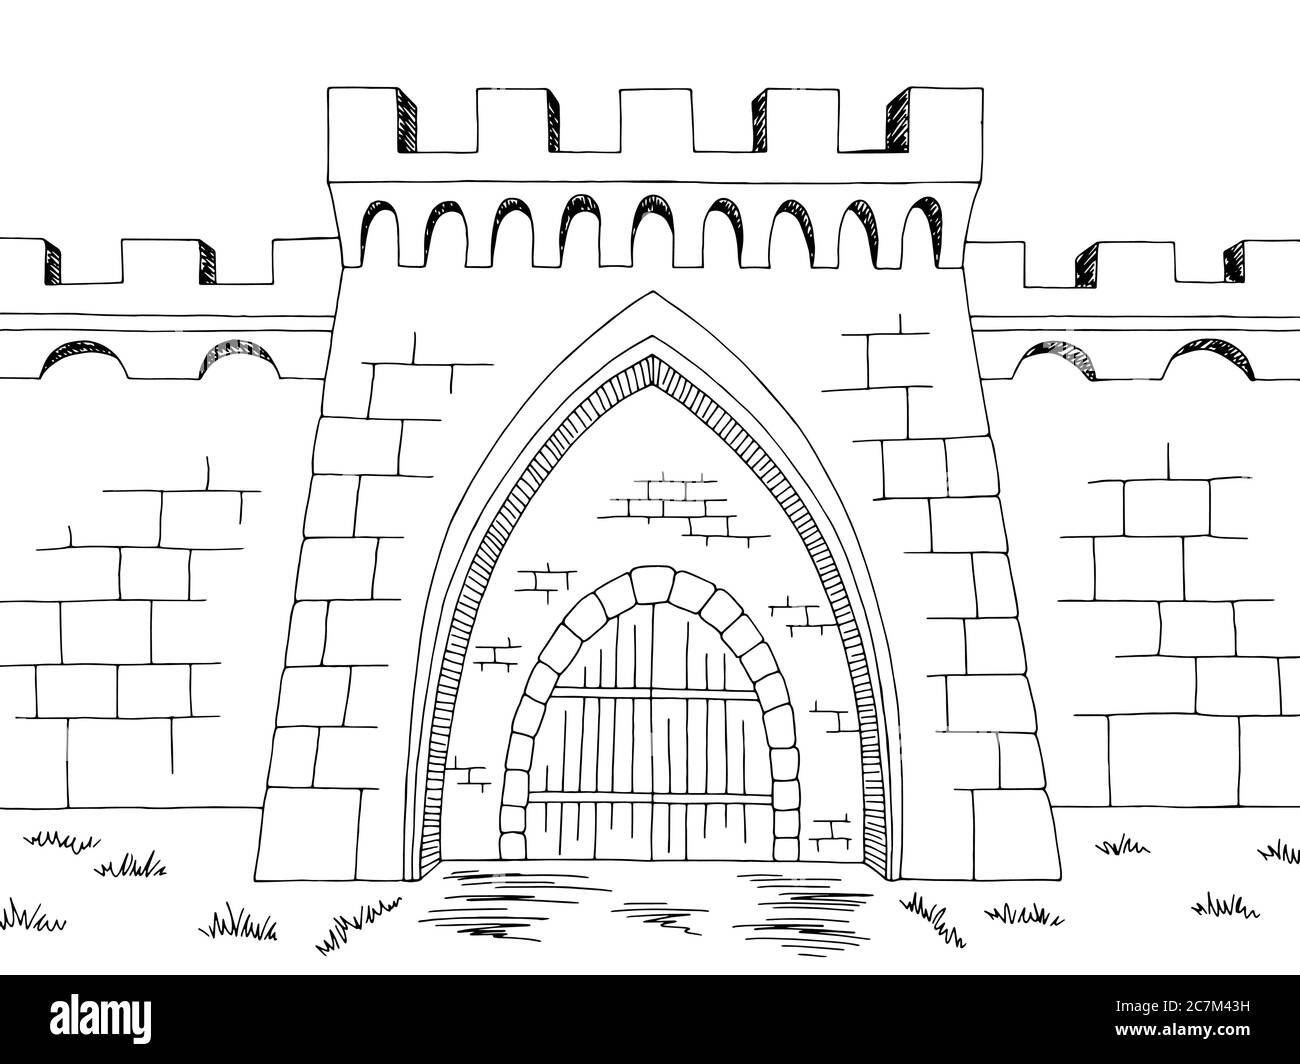 Burg Tor Grafik schwarz weiß Landschaft Skizze Illustration Vektor Stock Vektor